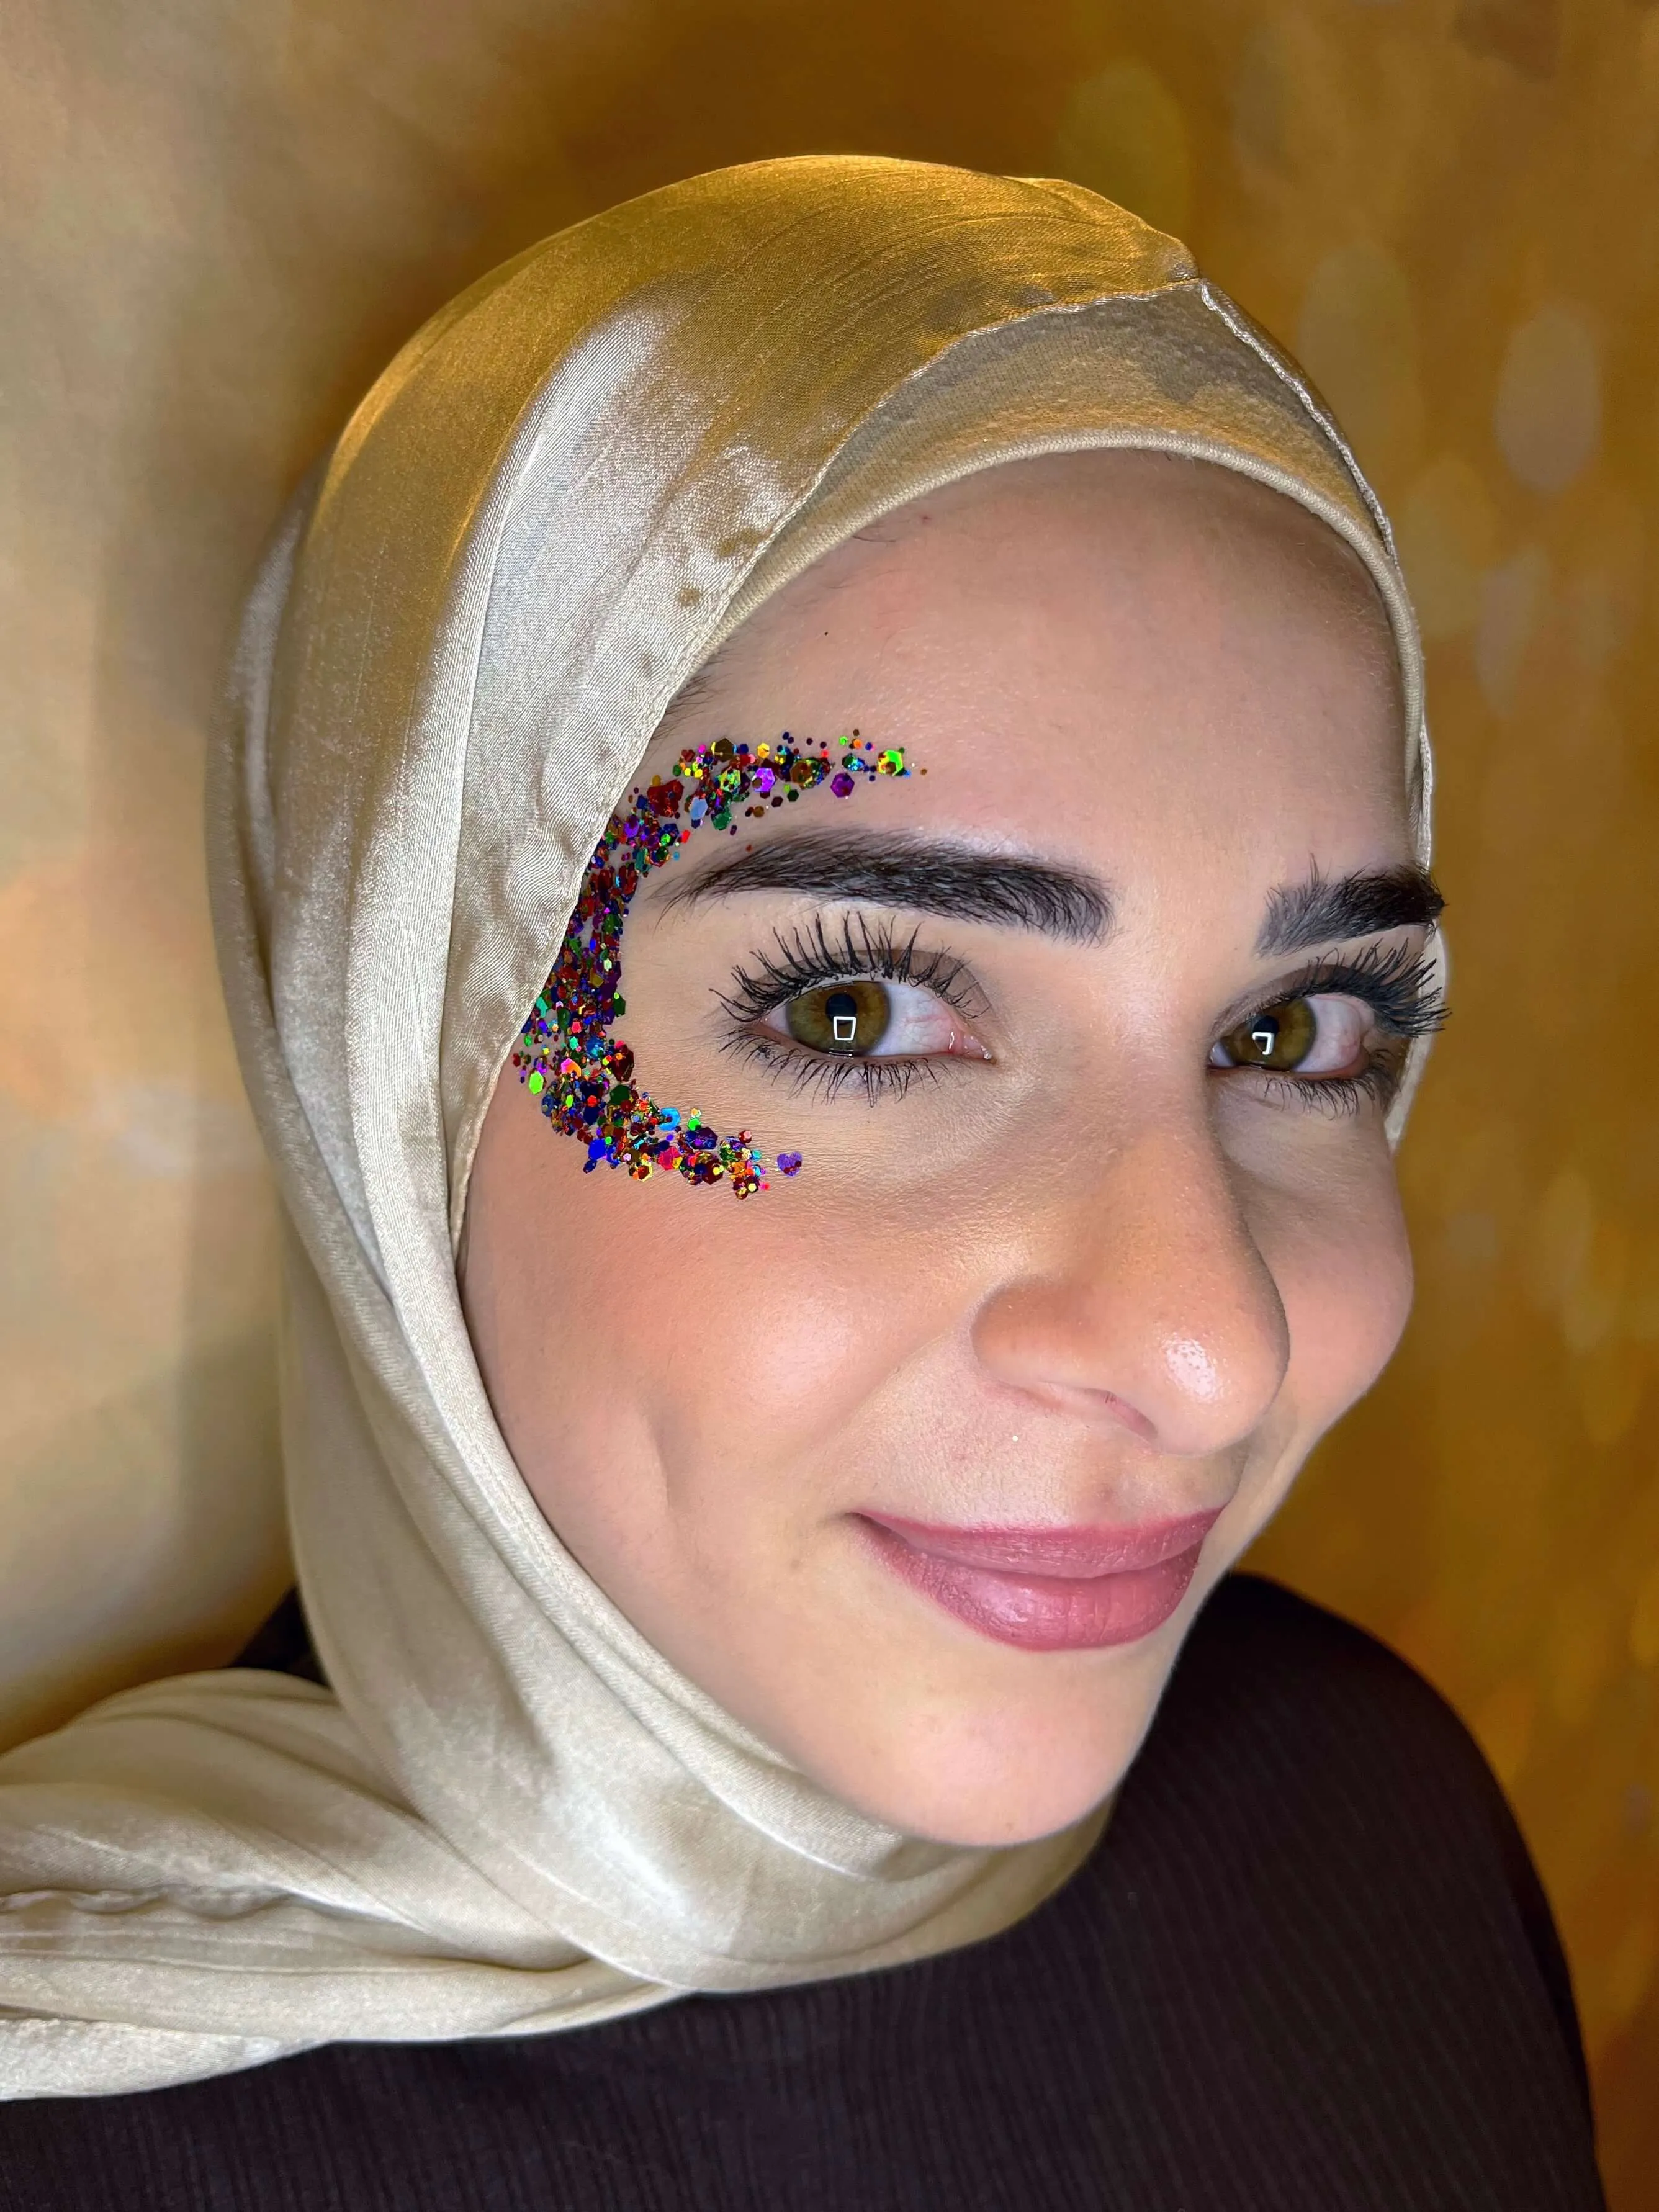 A beautiful face adorned by intricate glitter art